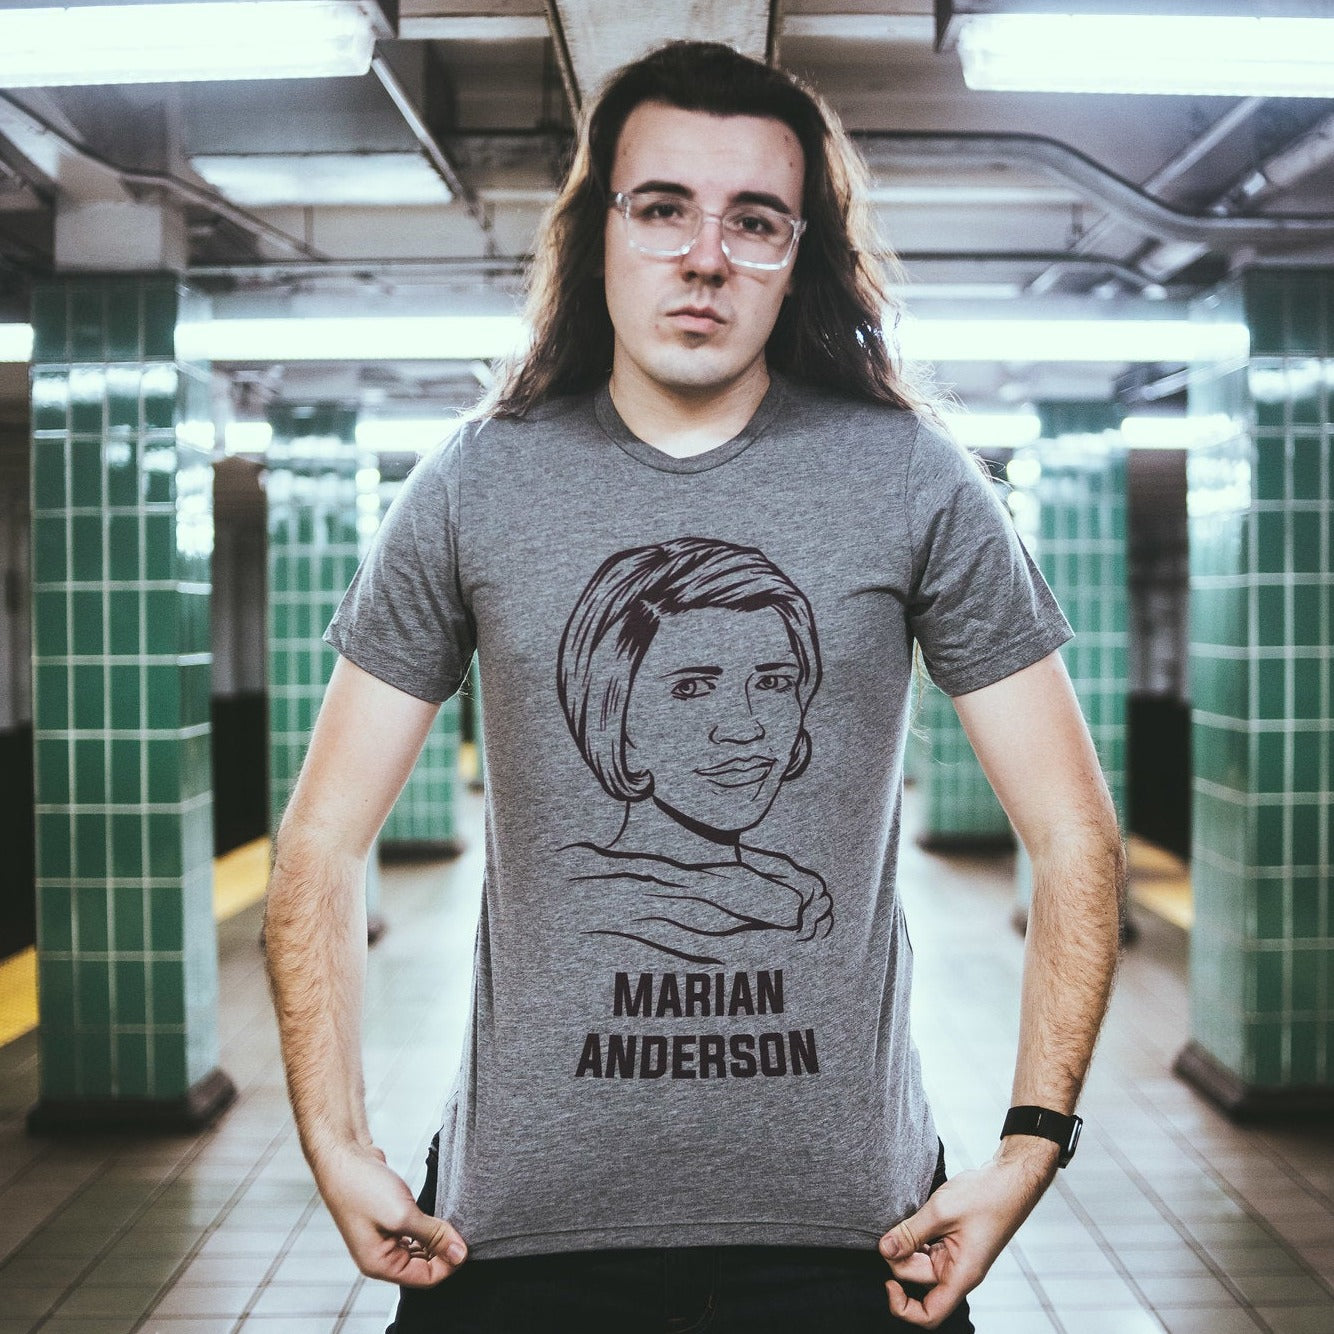 Marian Anderson t-shirt